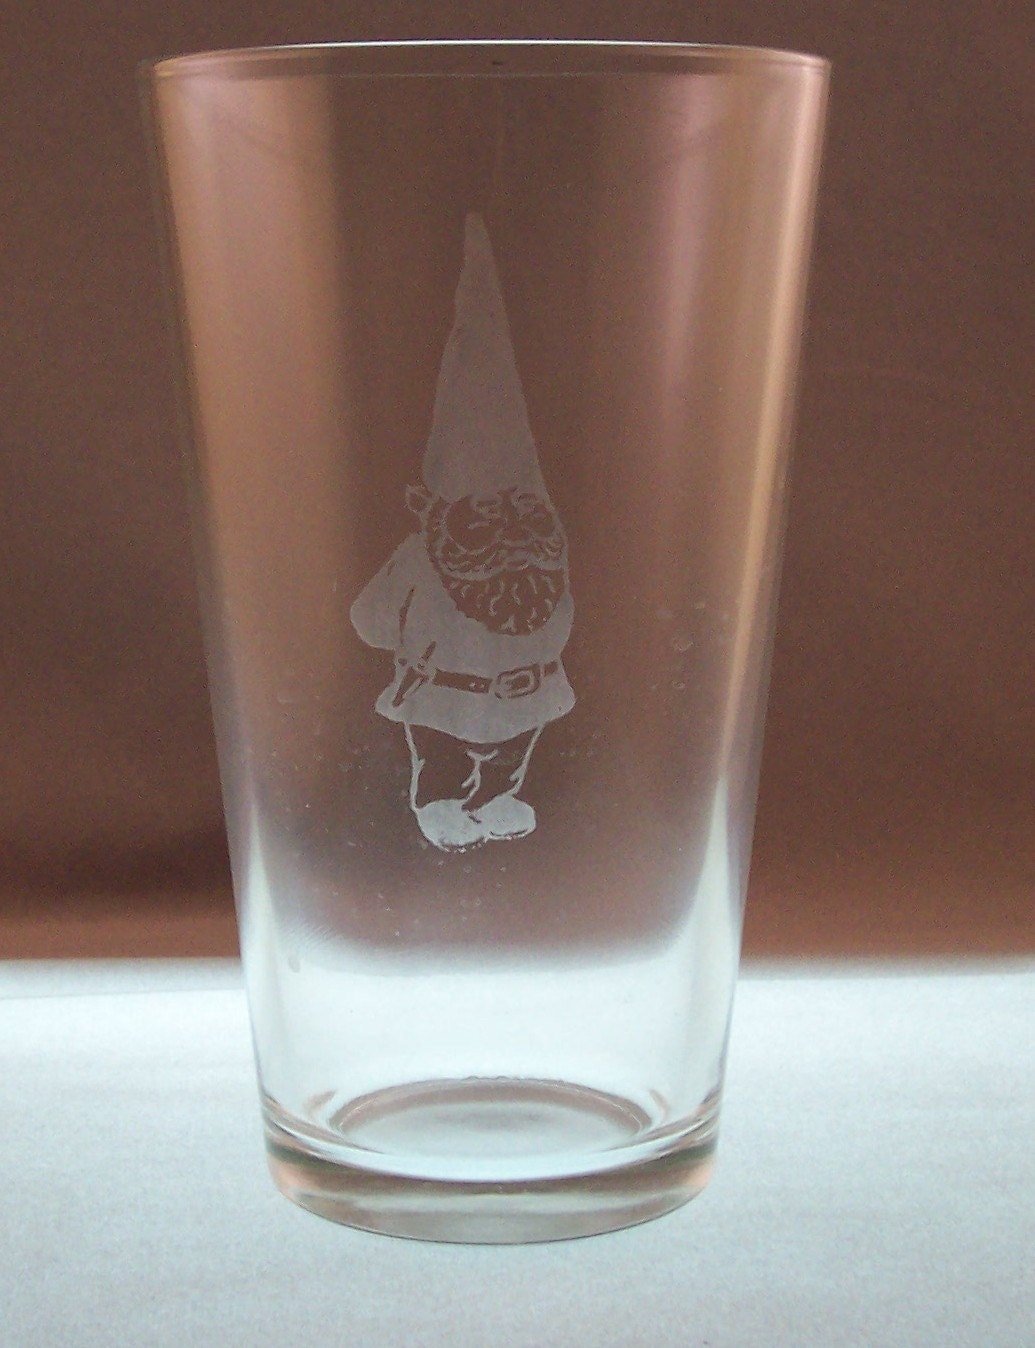 Gnome Pint Glass